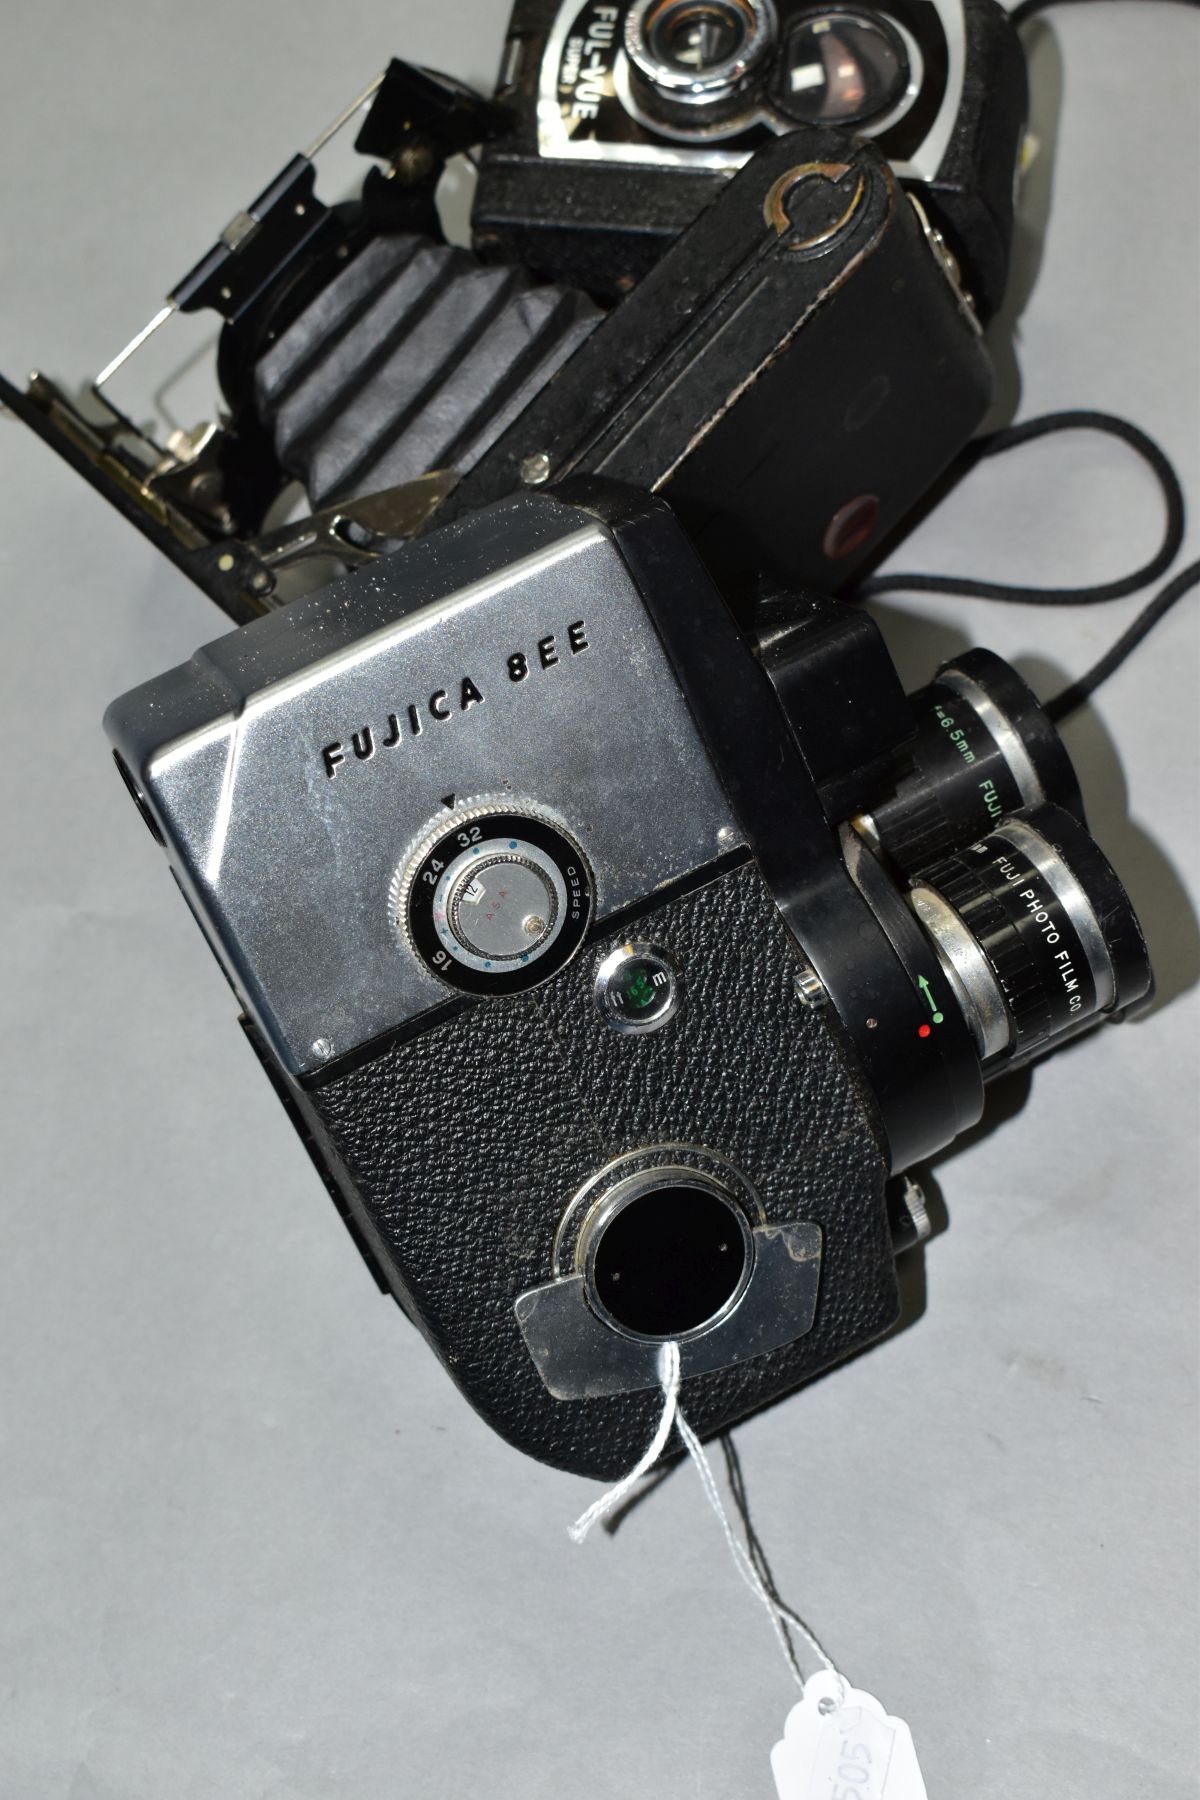 AN ENSIGN INSTANT POCKET FOLDING CAMERA, a Ross Ensign Ful-Vue Super and a Fujica 8EE Cine camera ( - Image 7 of 8